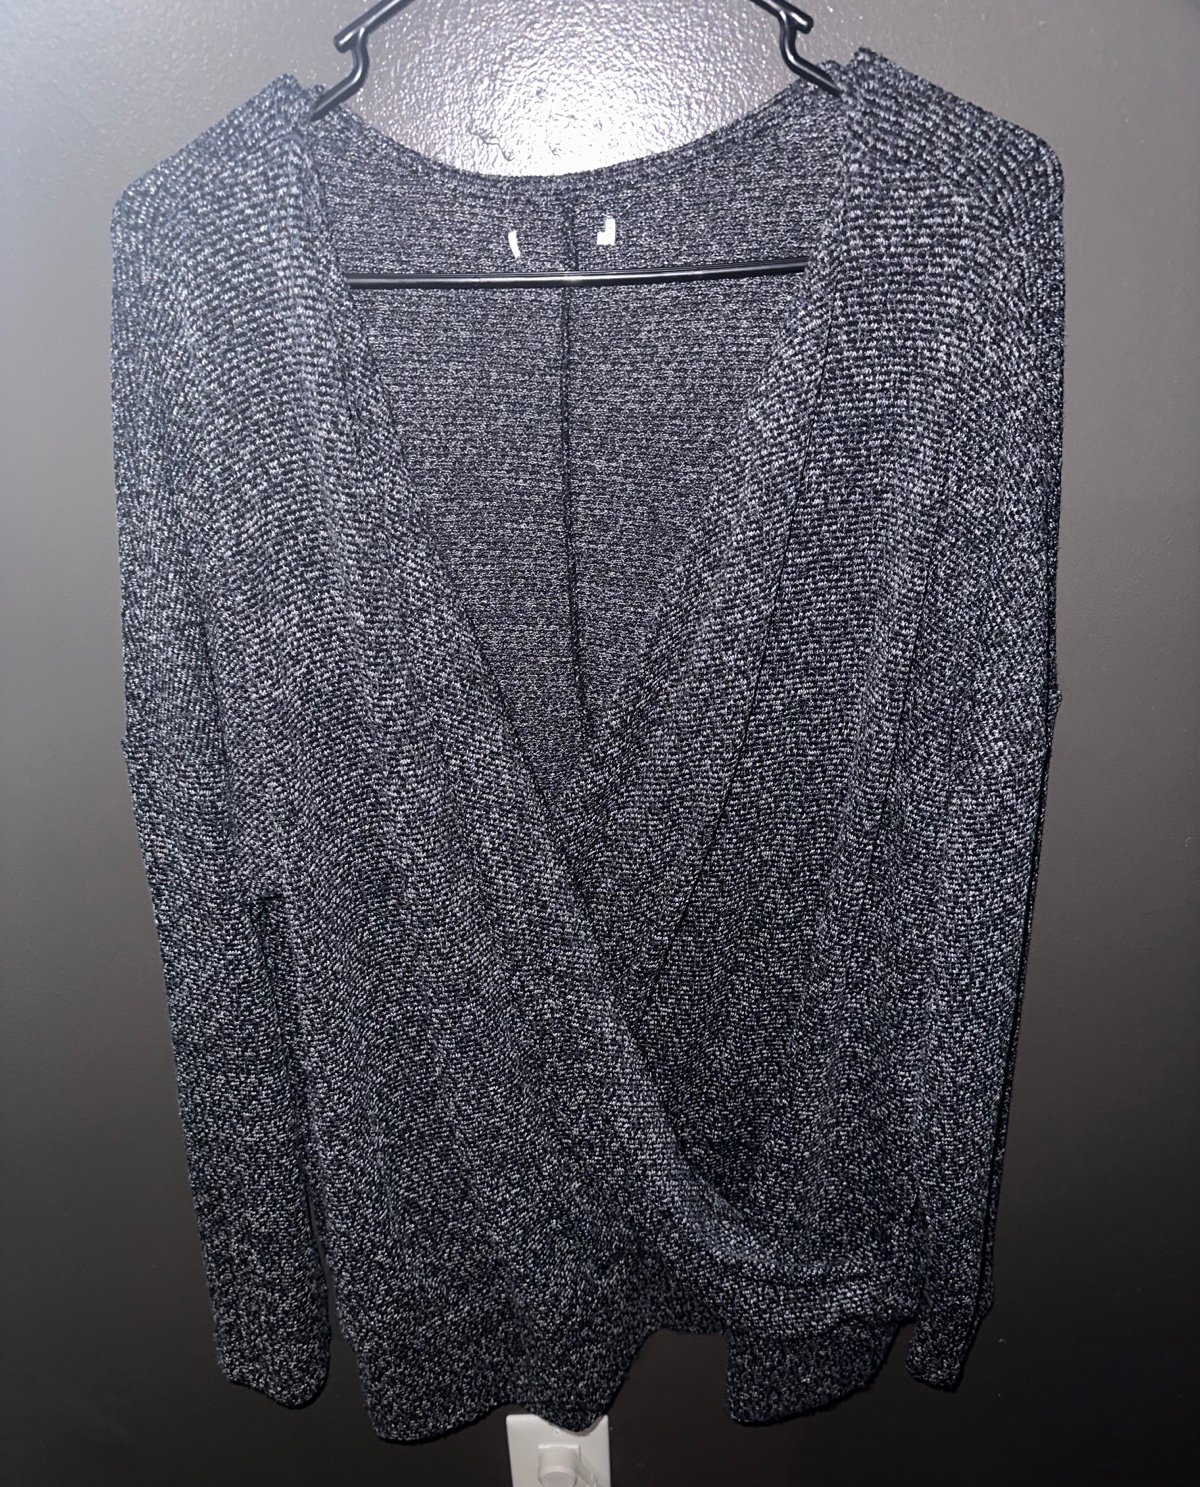 Exclusive Women’s Maurice’s XL sweater FLMYtespi hot sale